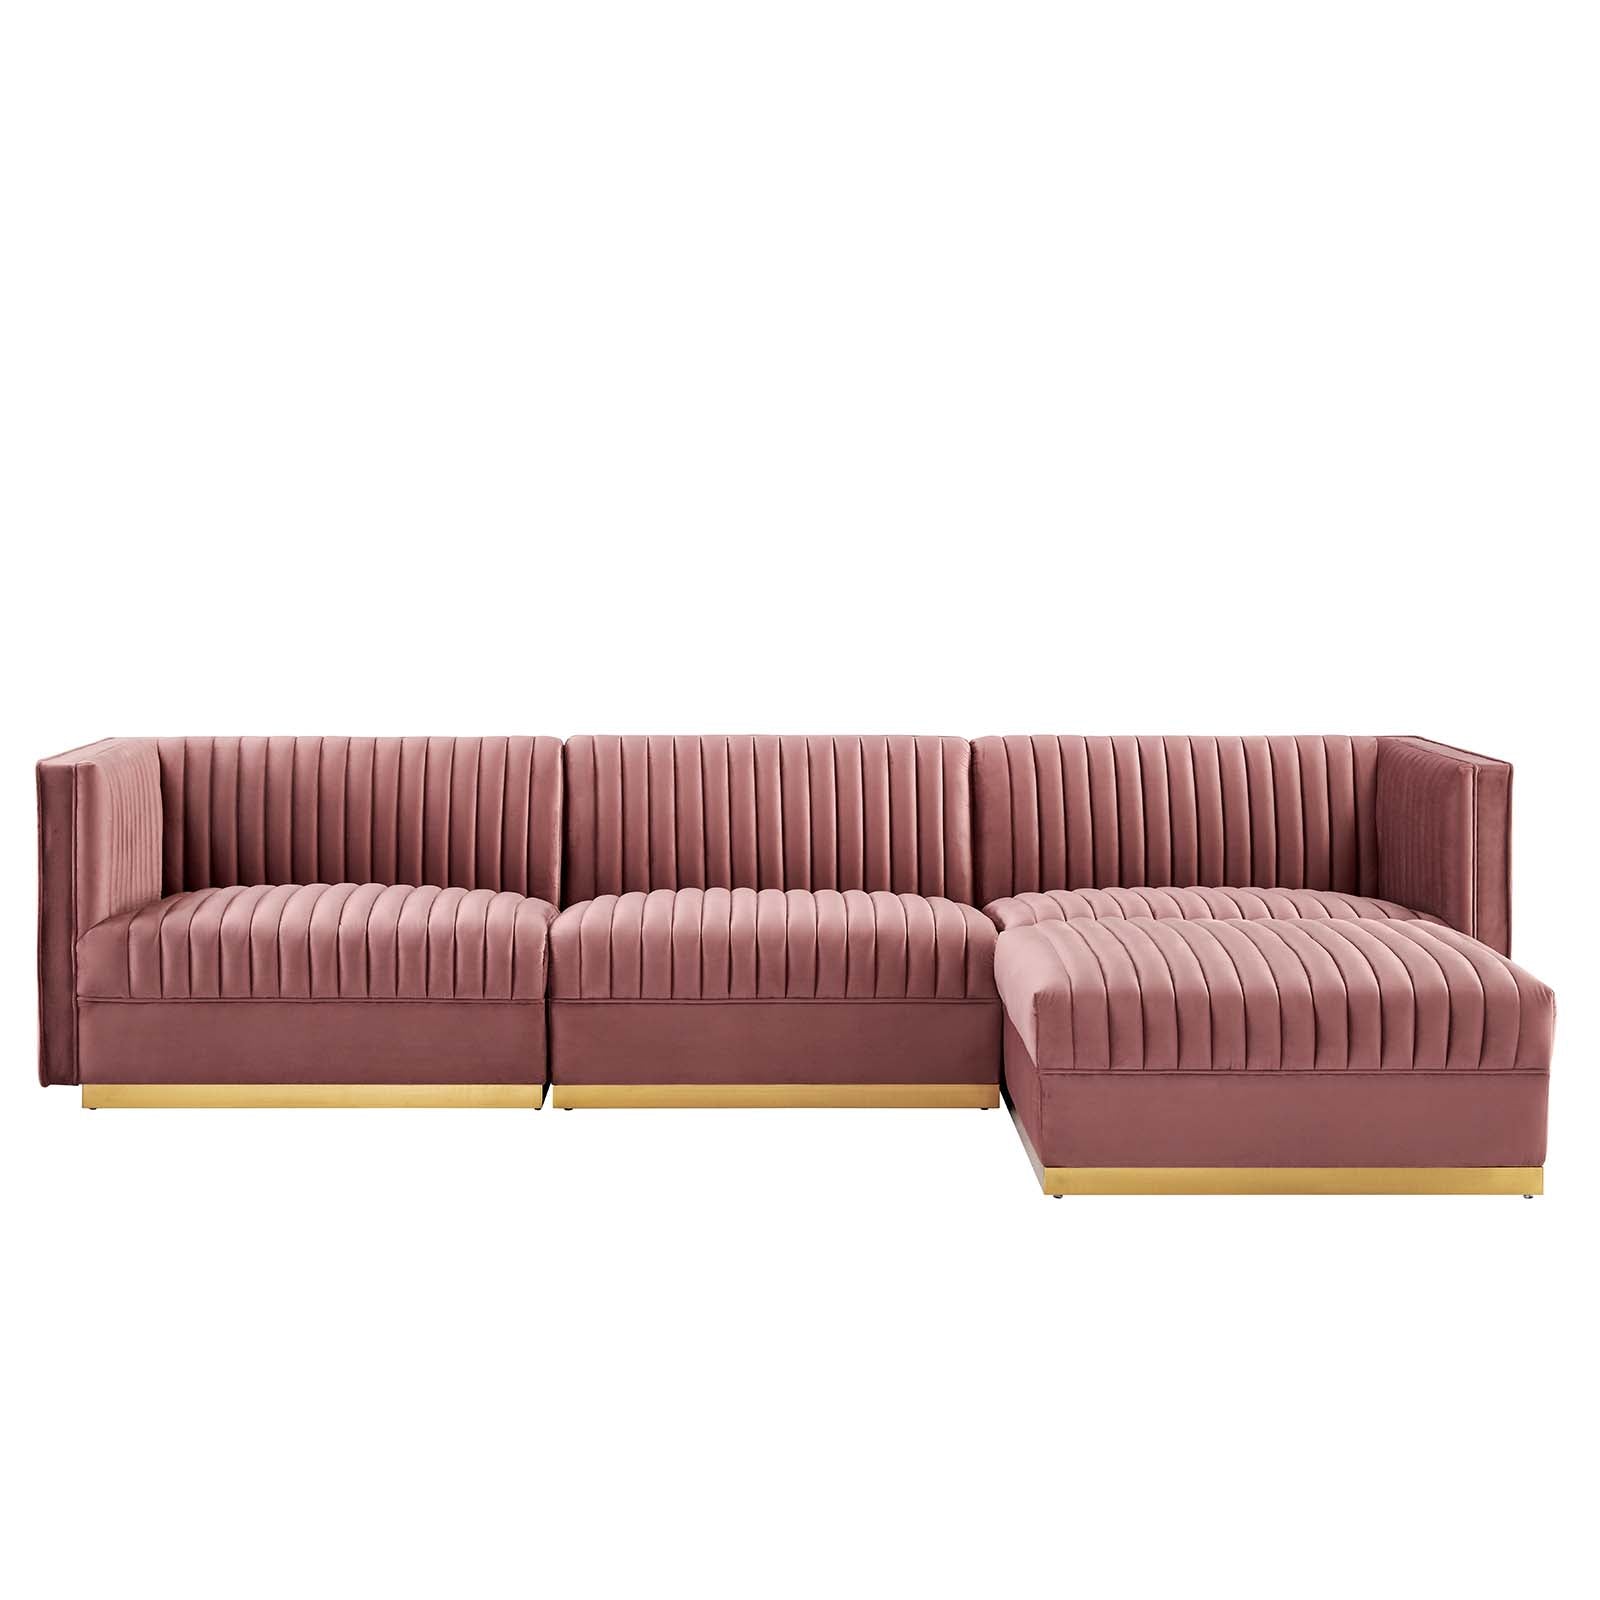 Sanguine Channel Tufted Performance Velvet 4-Piece Modular Sectional Sofa